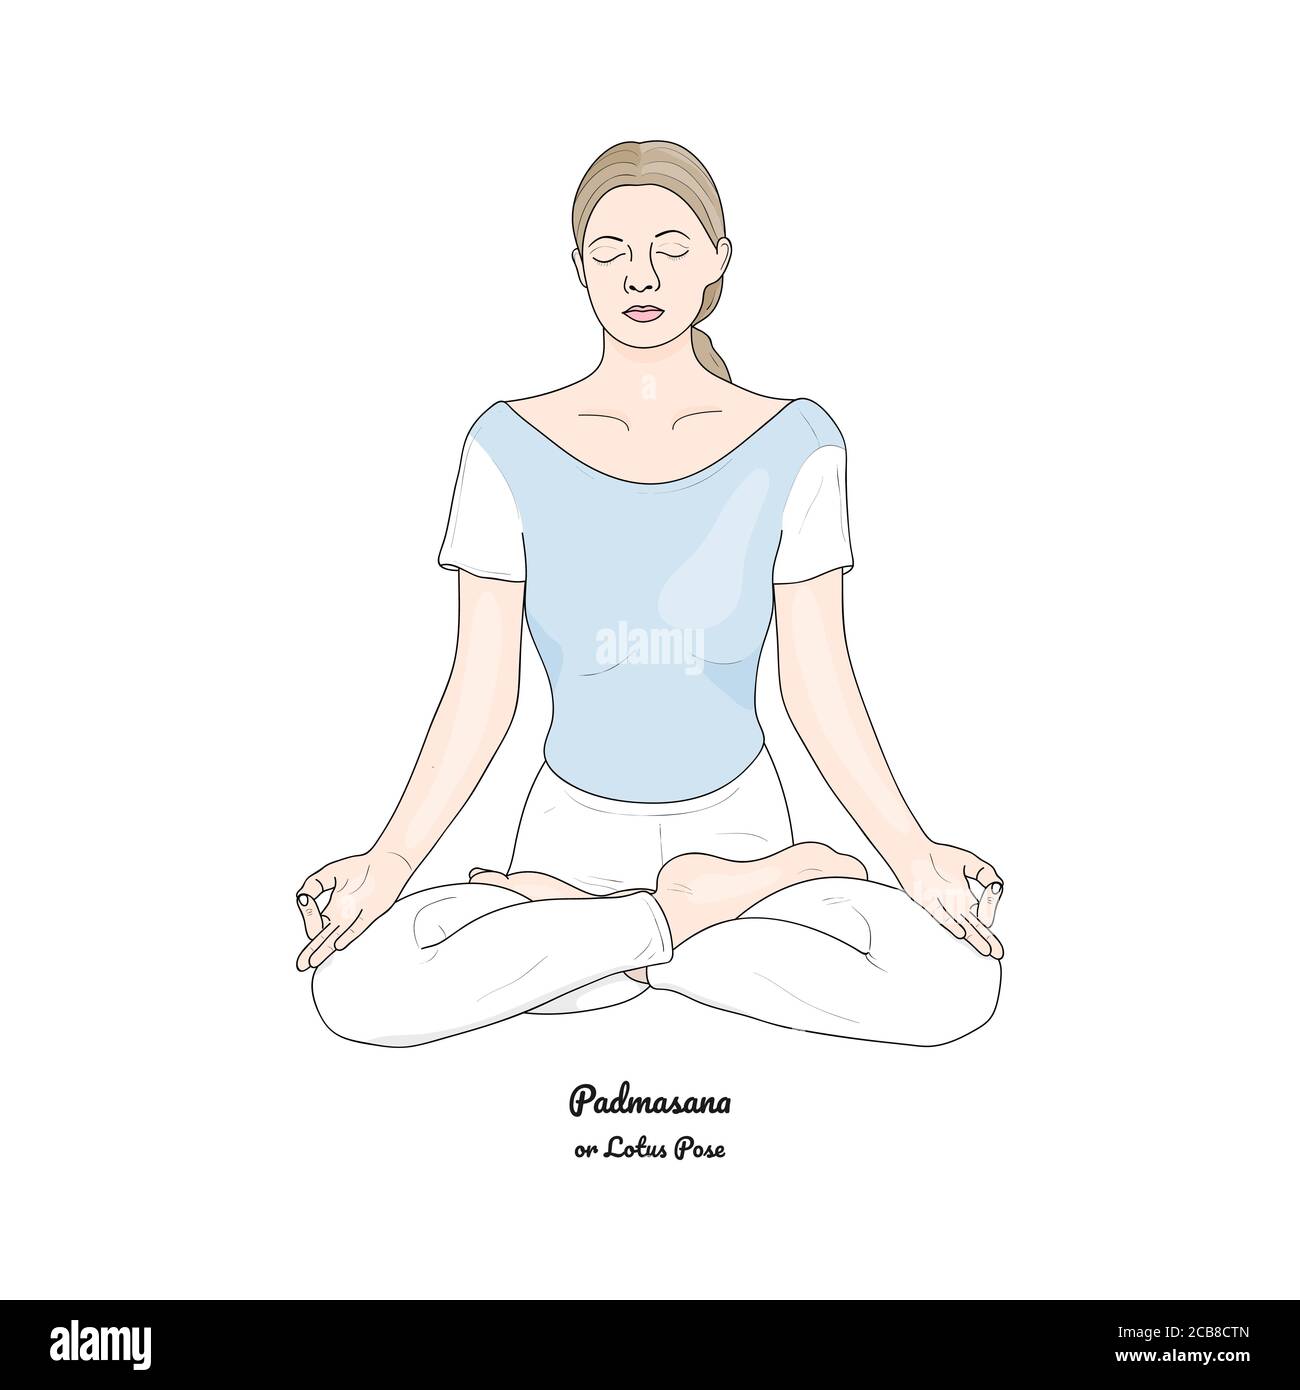 No more pain in padmasana | how to do padmasana | lotus pose step by step  step | correction of asana - YouTube